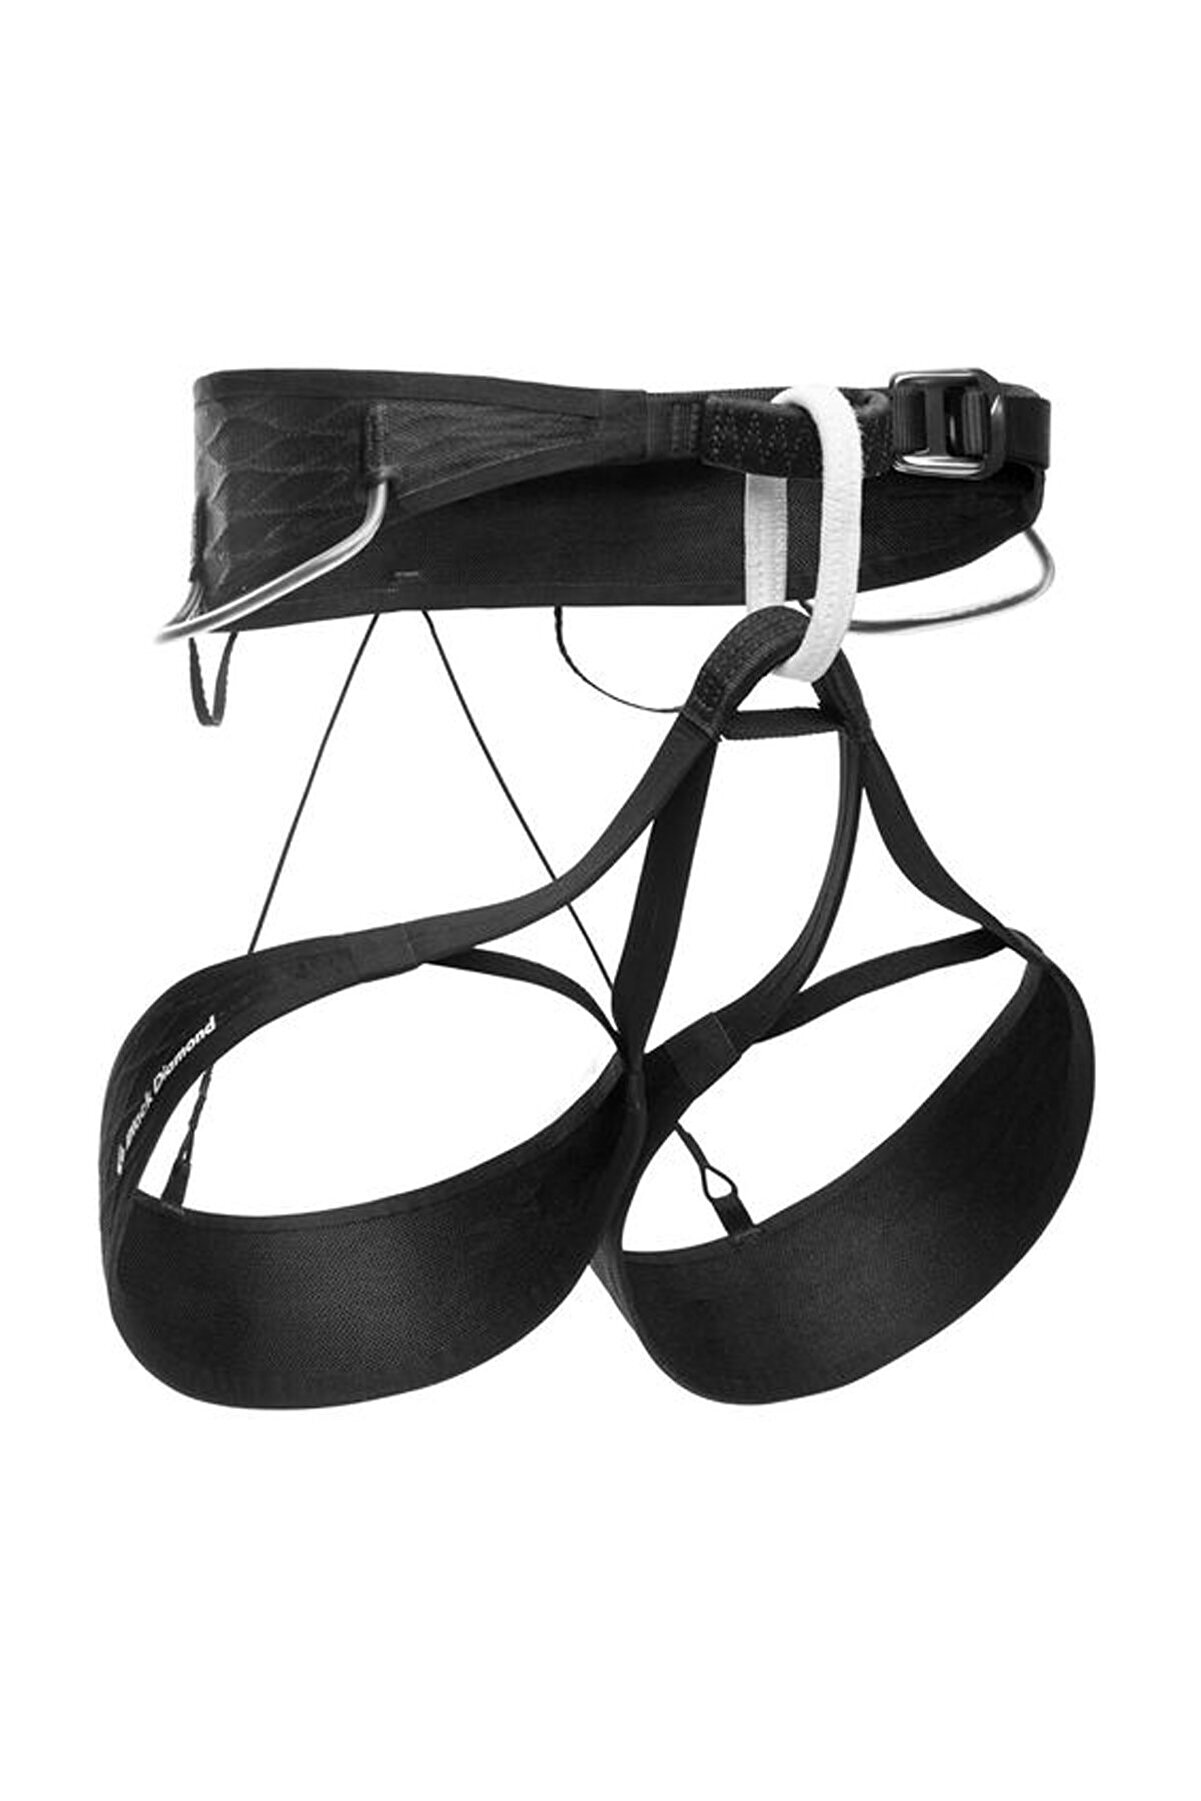 Genel Markalar Black Dıamond Aırnet Harness - Men's Outdoor Emniyet Kemeri Beyaz-siyah S Beden